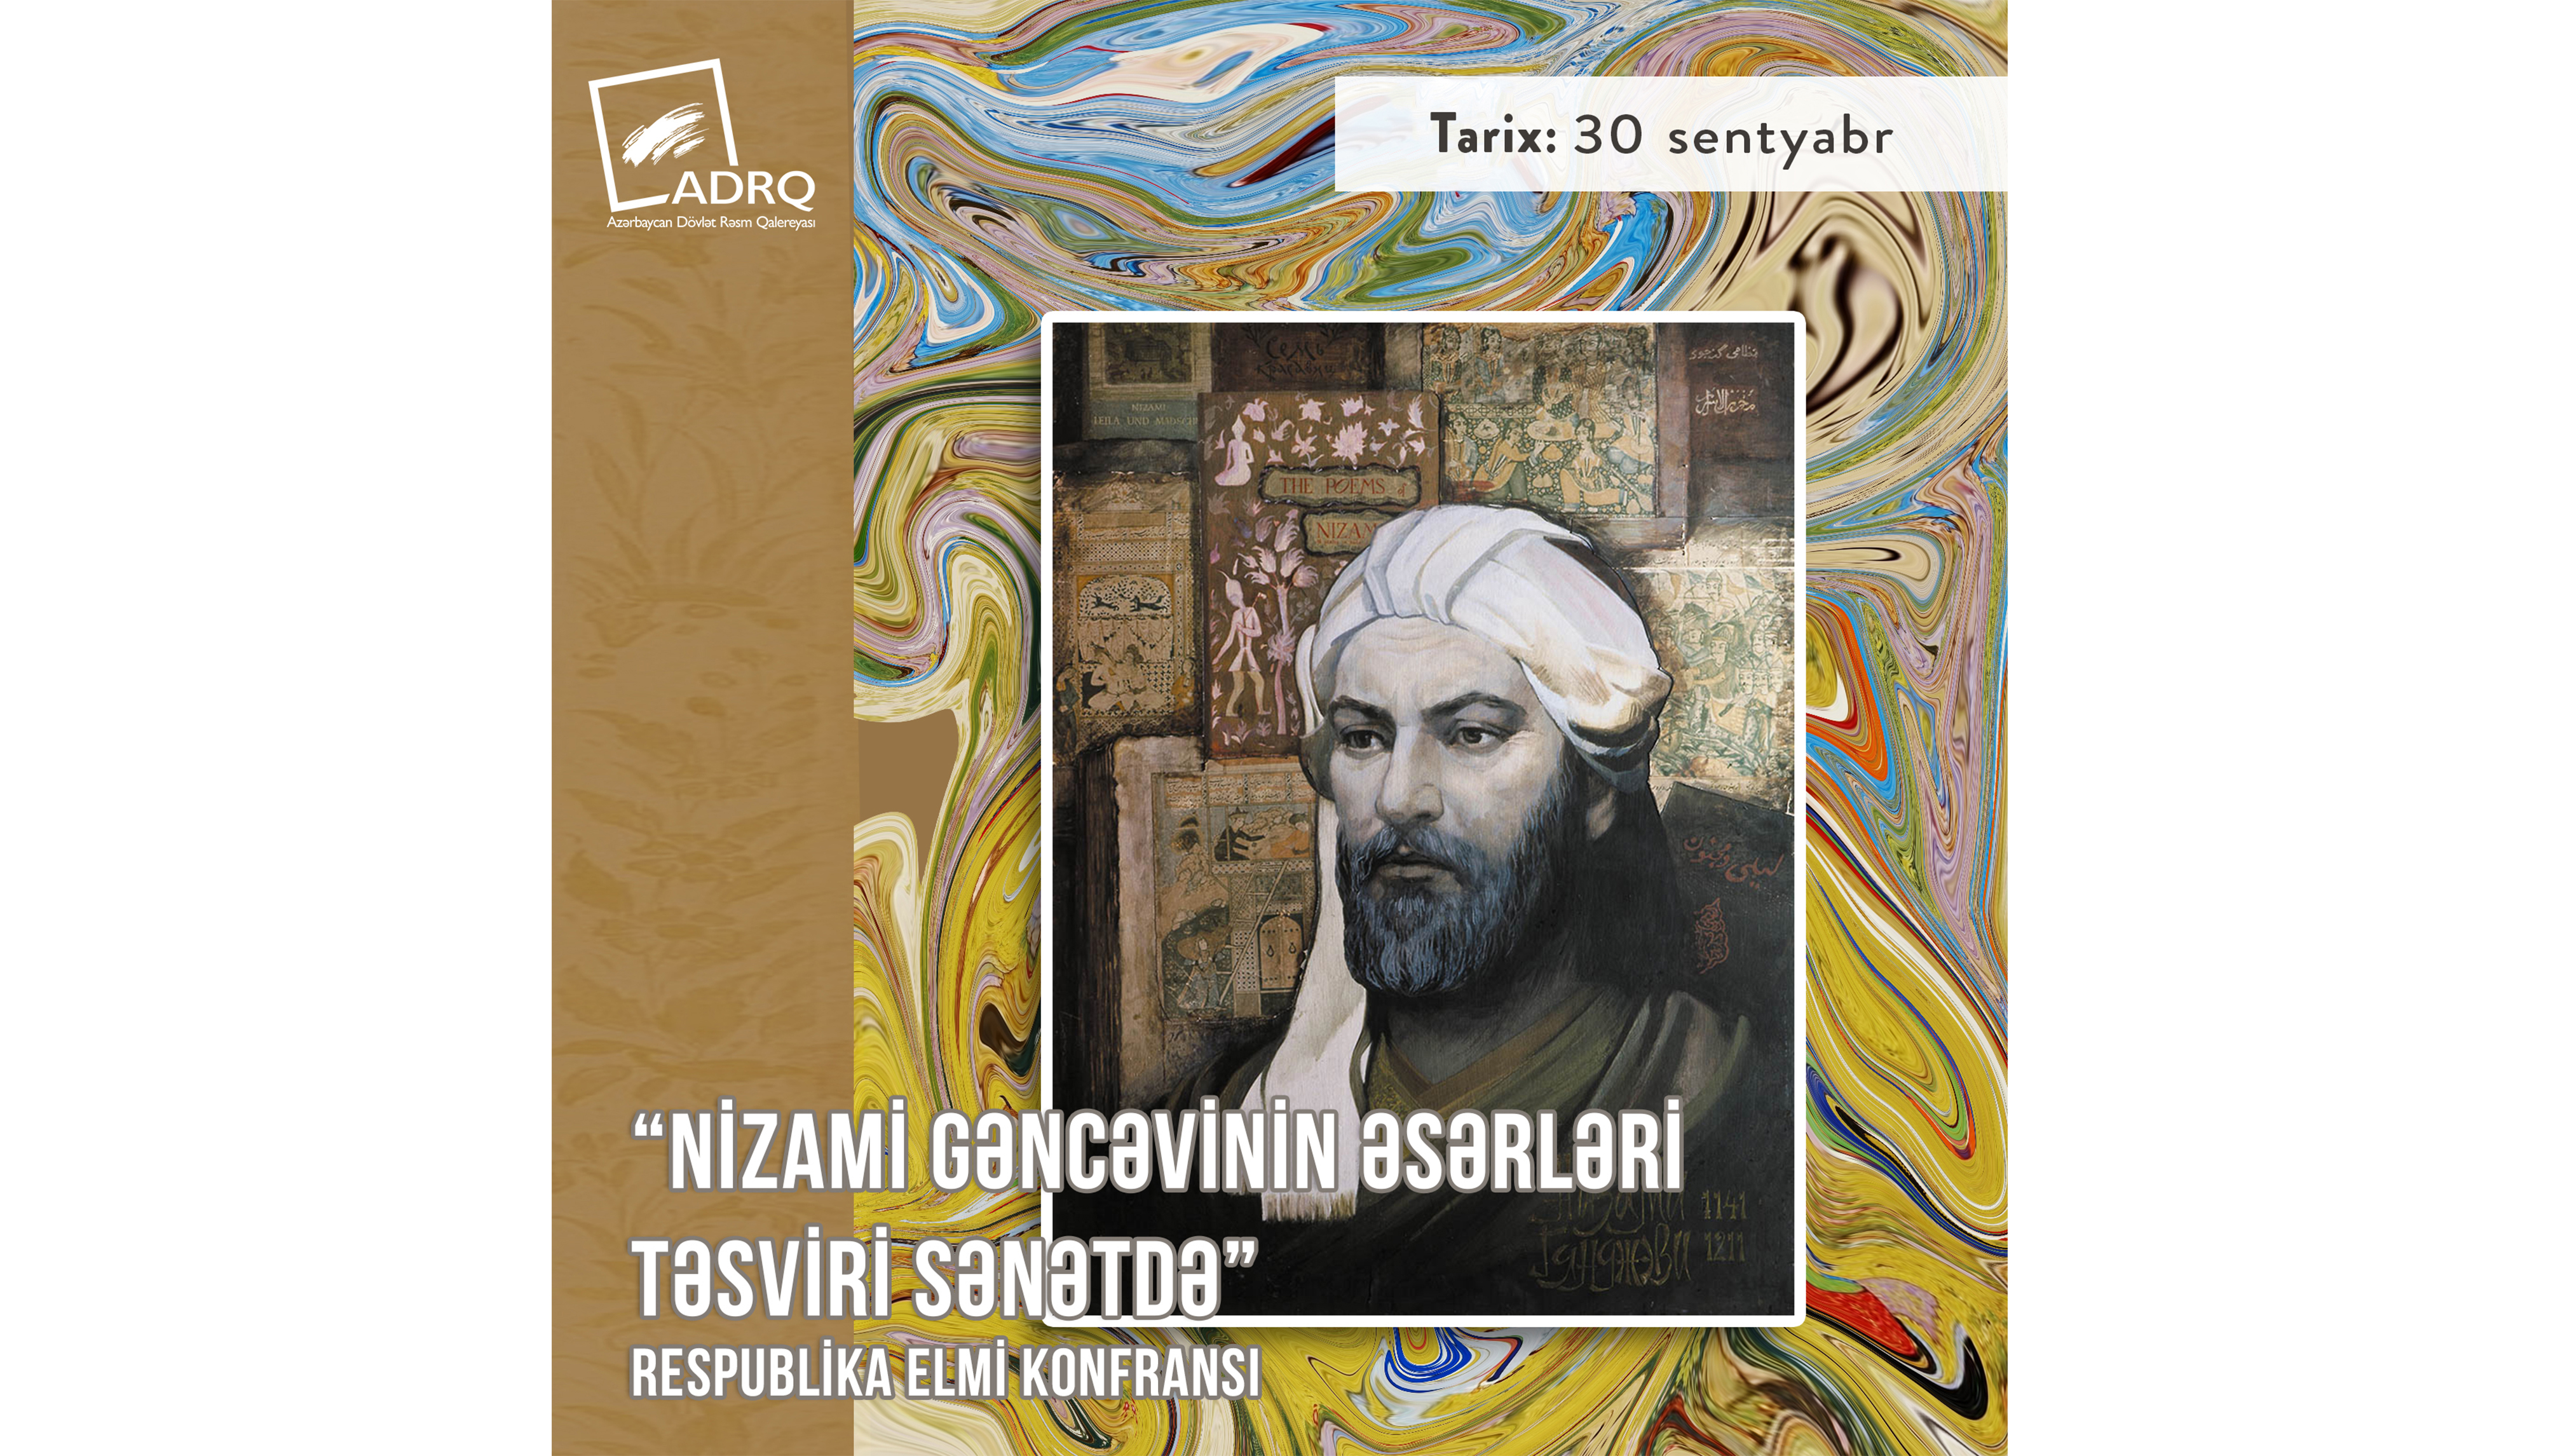 Republican scientific conference "Works of Nizami Ganjavi in fine arts" will be held.